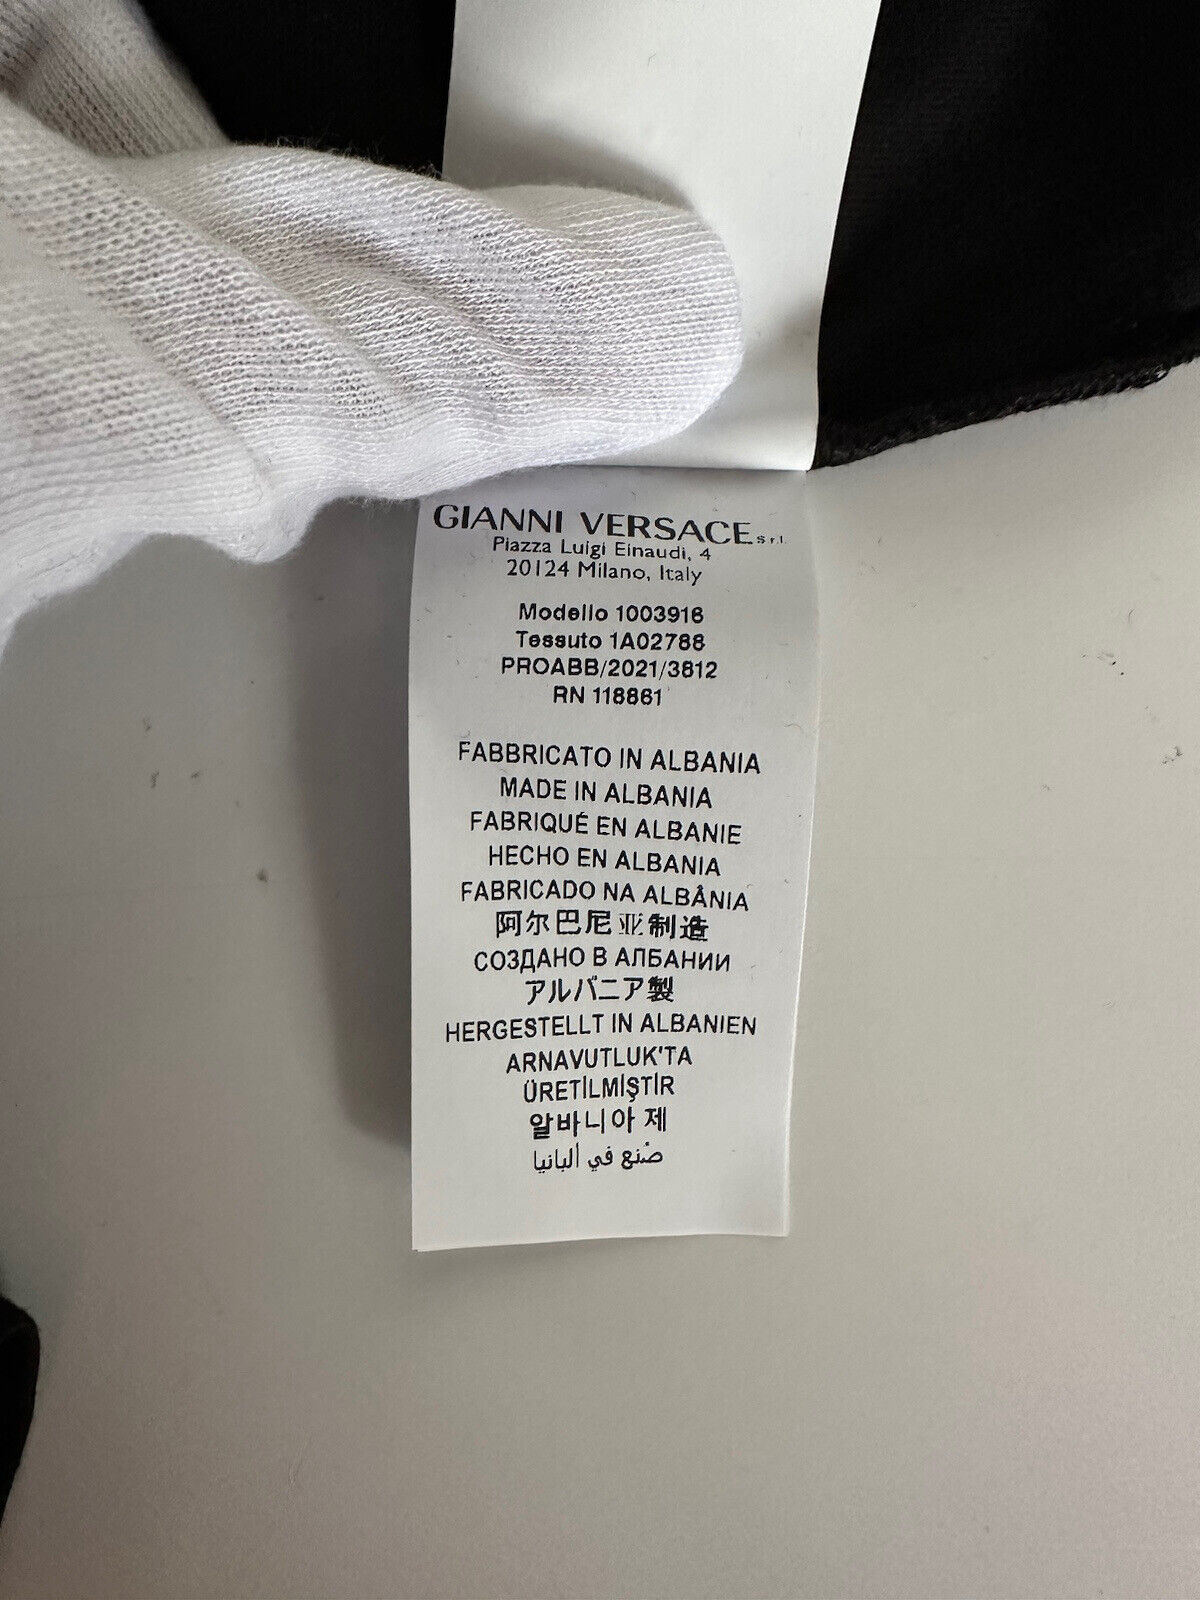 NWT $450 Versace Medusa Printed Black Mitchel Fit Jersey T-Shirt L 1003916